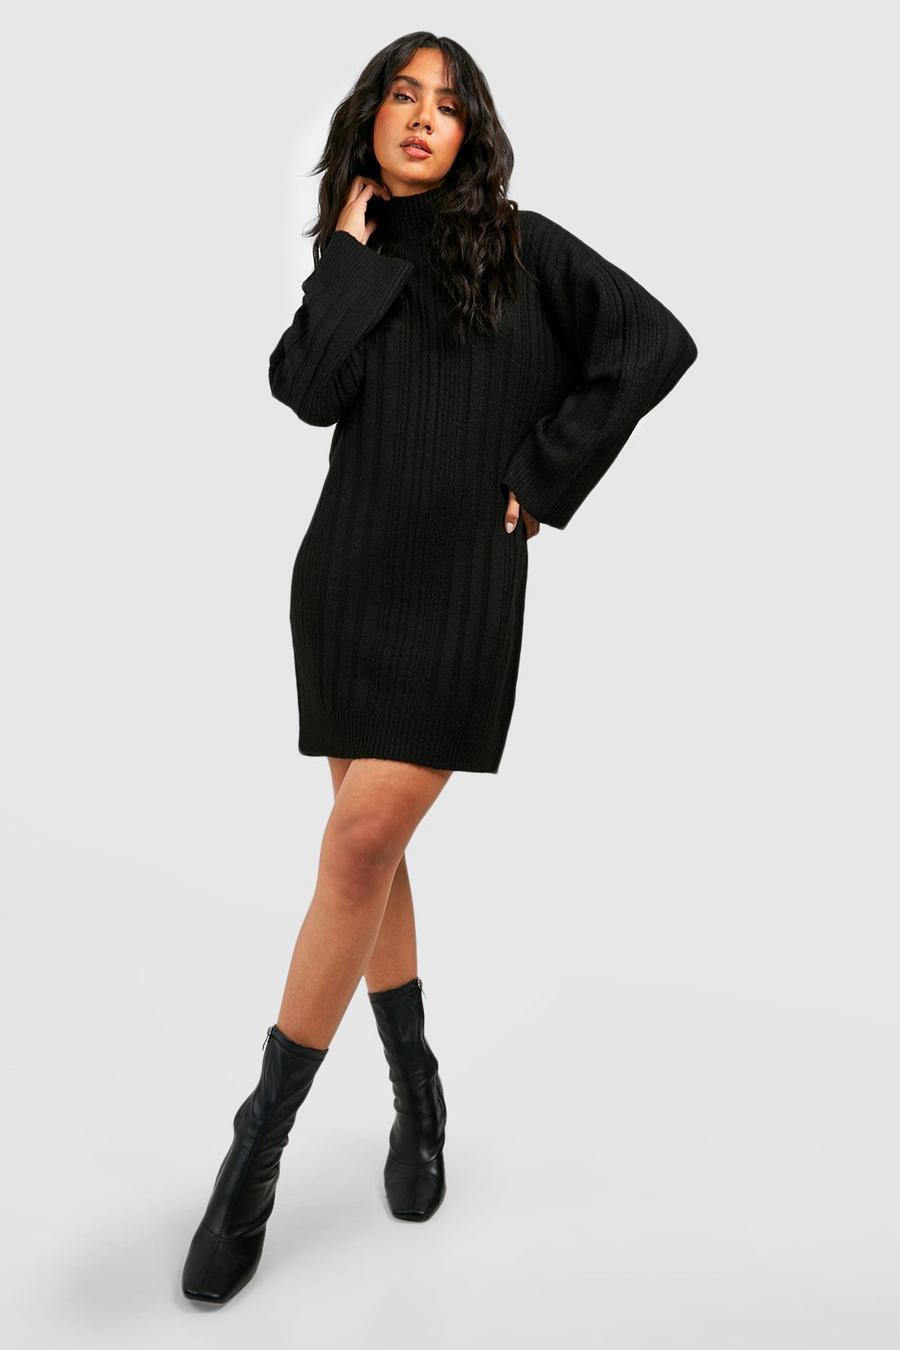 Black Soft Mixed Rib Knit Sweater Dress